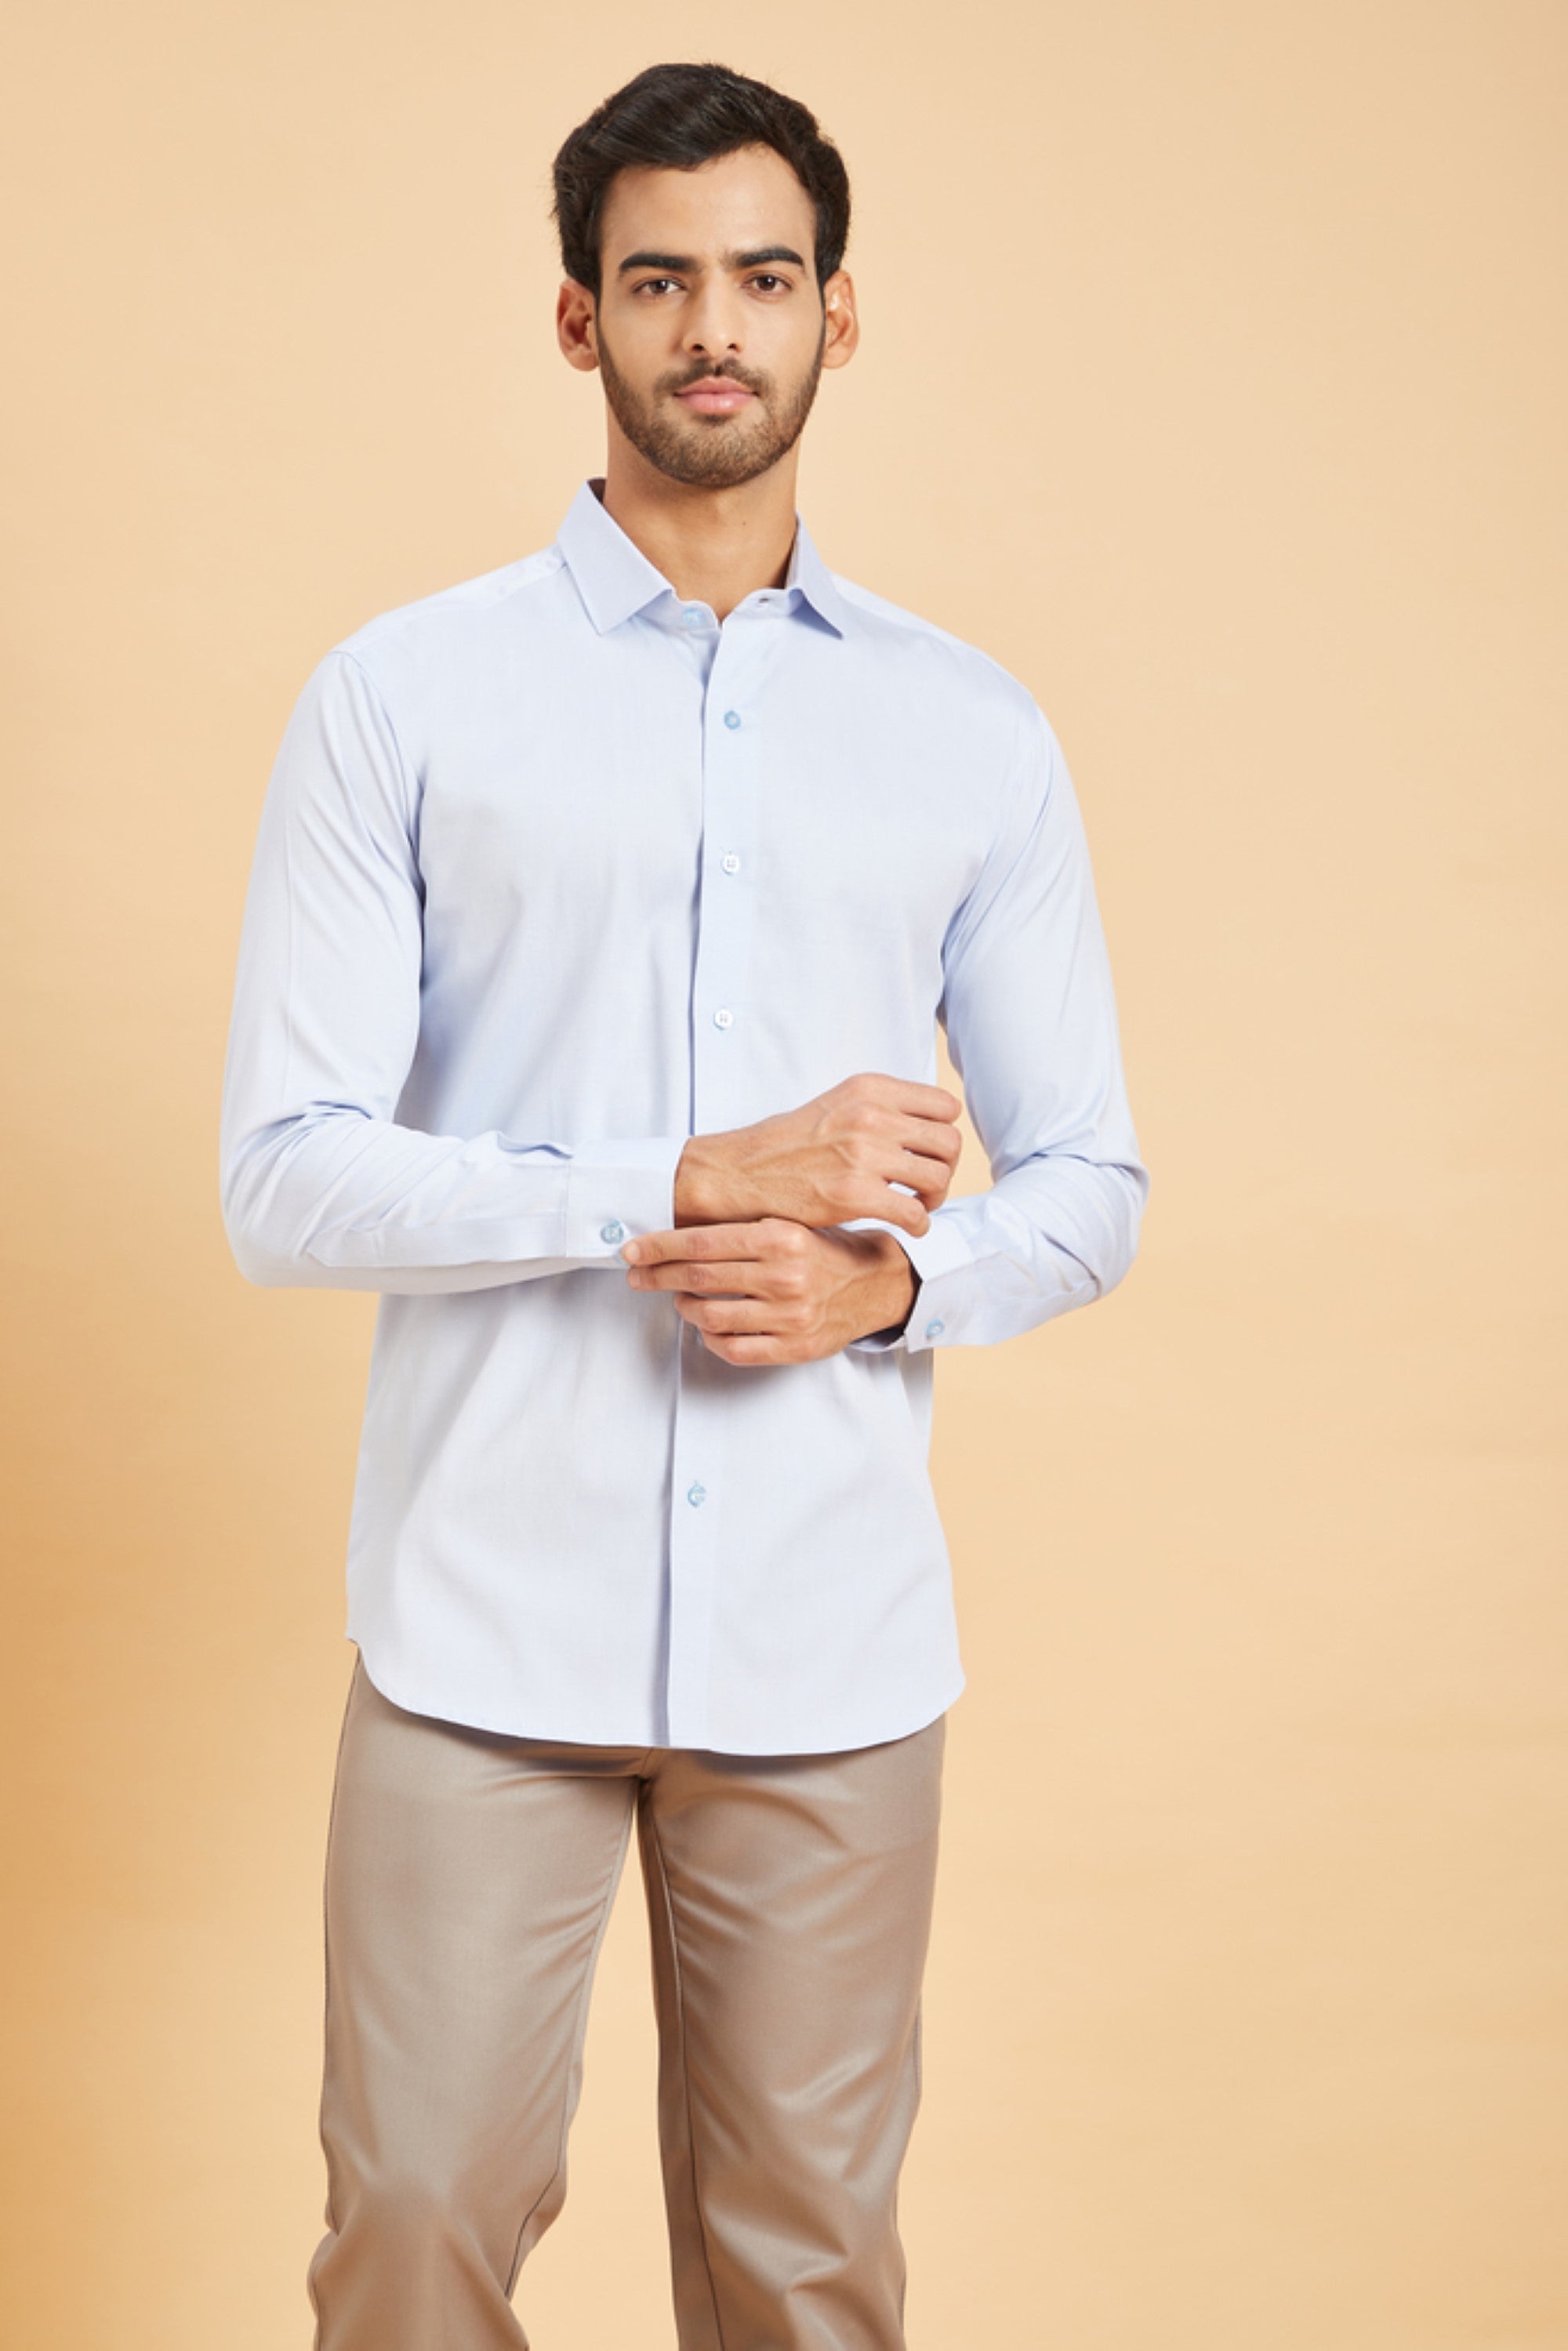 Men's Sky Blue Color Skii Collar Shirt Full Sleeves Casual Shirt - Hilo Design